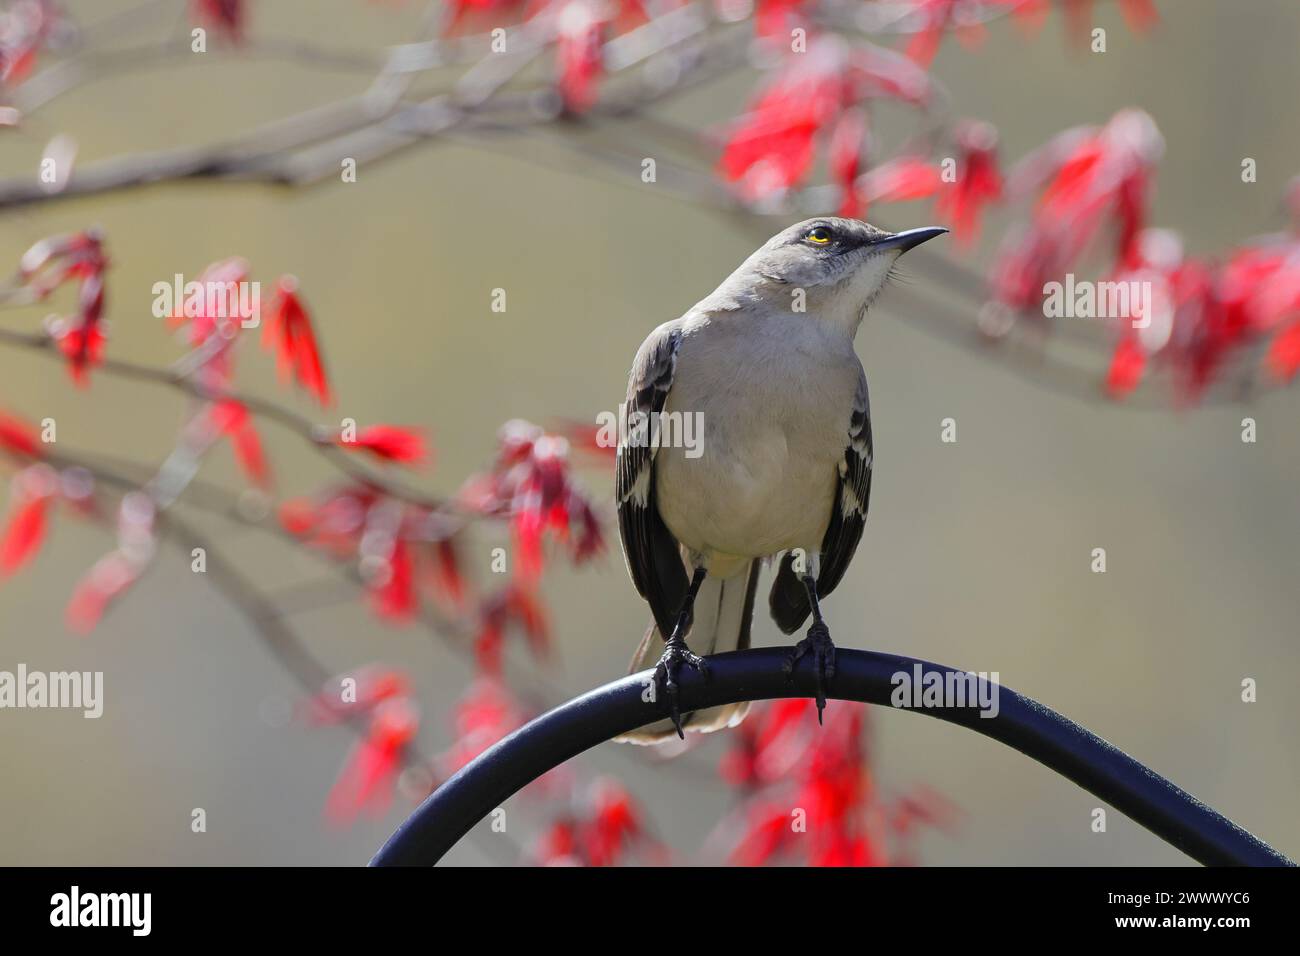 A mockingbird perched on a metal pole beneath a tree. Stock Photo